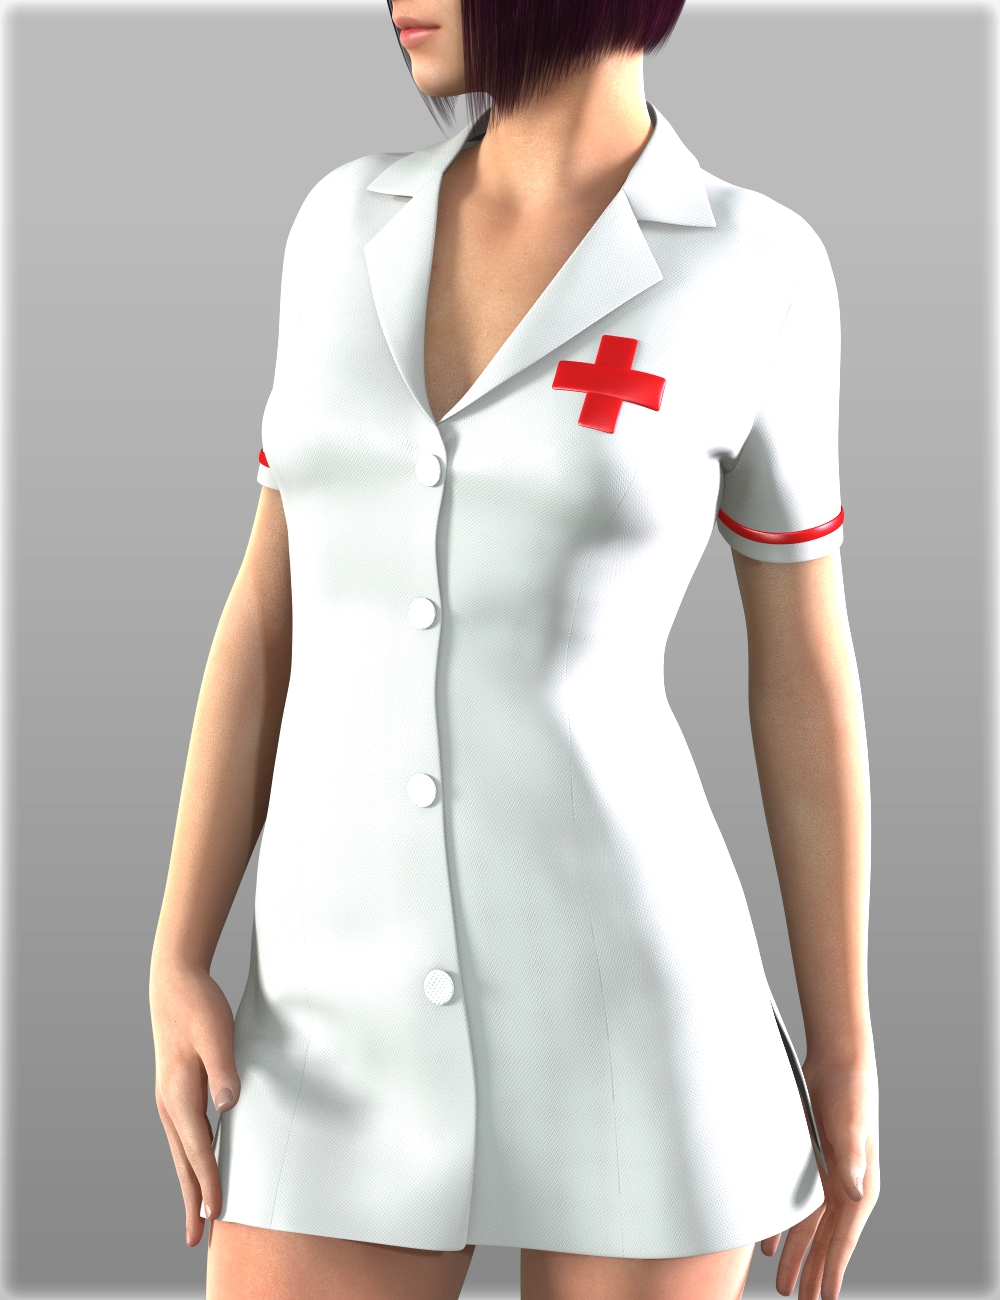 Sexy Nurse Uniform For Genesis 2 Female S Daz 3d